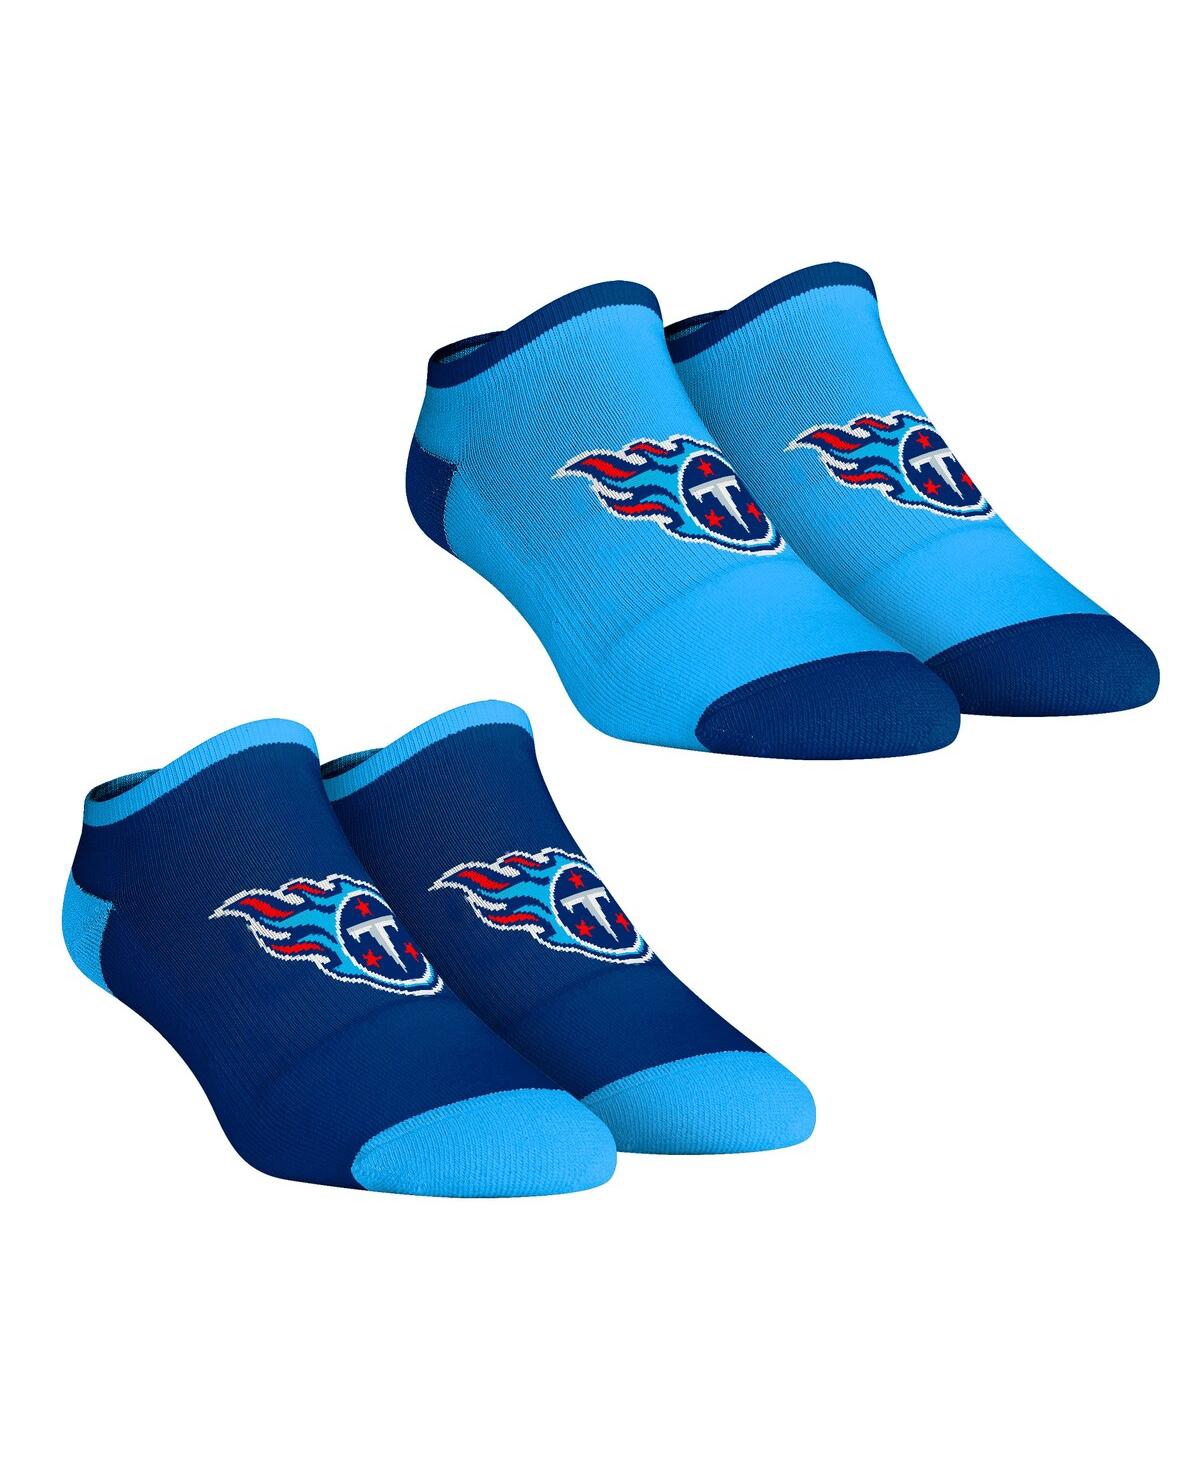 Women's Rock 'Em Socks Tennessee Titans Core Team 2-Pack Low Cut Ankle Sock Set - Blue